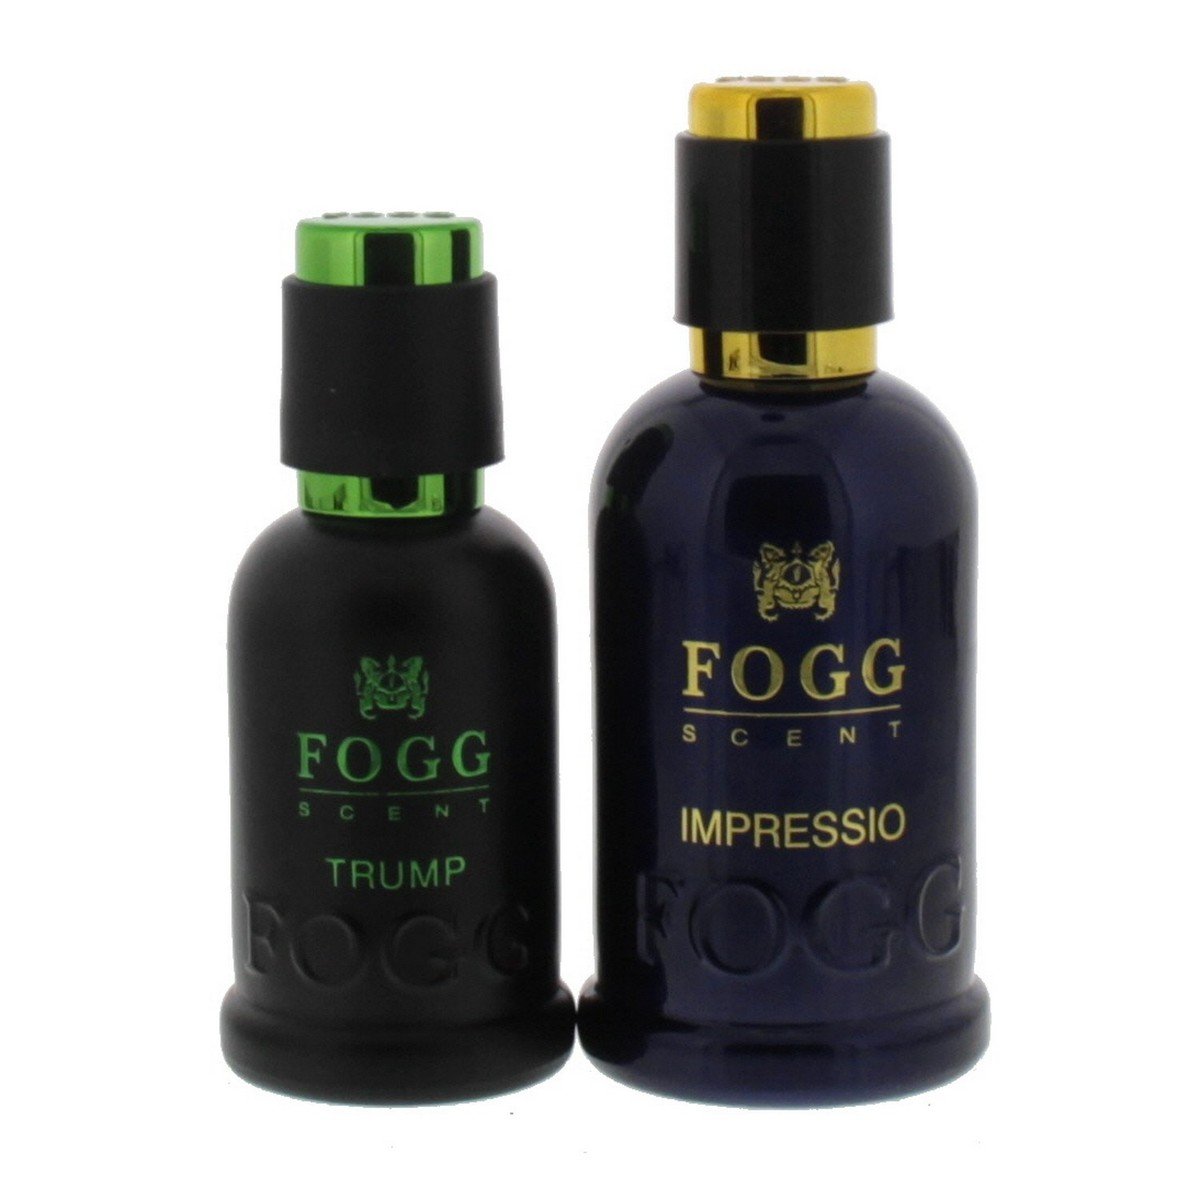 Fogg Eau De Parfum for Men Impressio 100 ml +Trump 50 ml